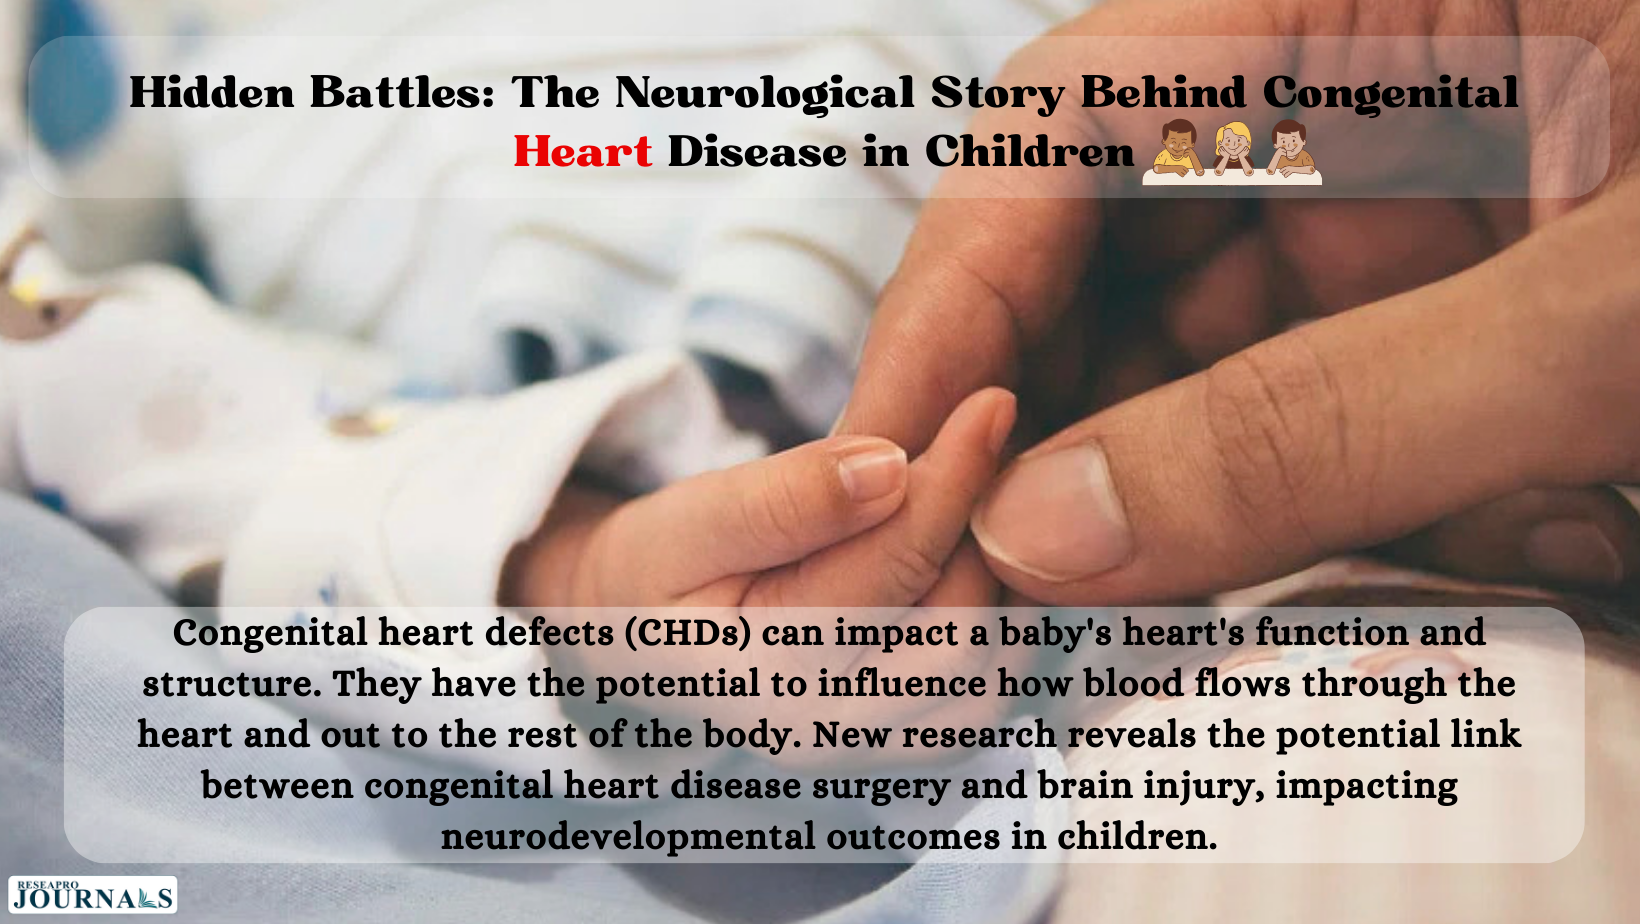 A Heart-Brain Connection: Could Congenital Heart Disease Be Affecting Our Children’s Neural Development?